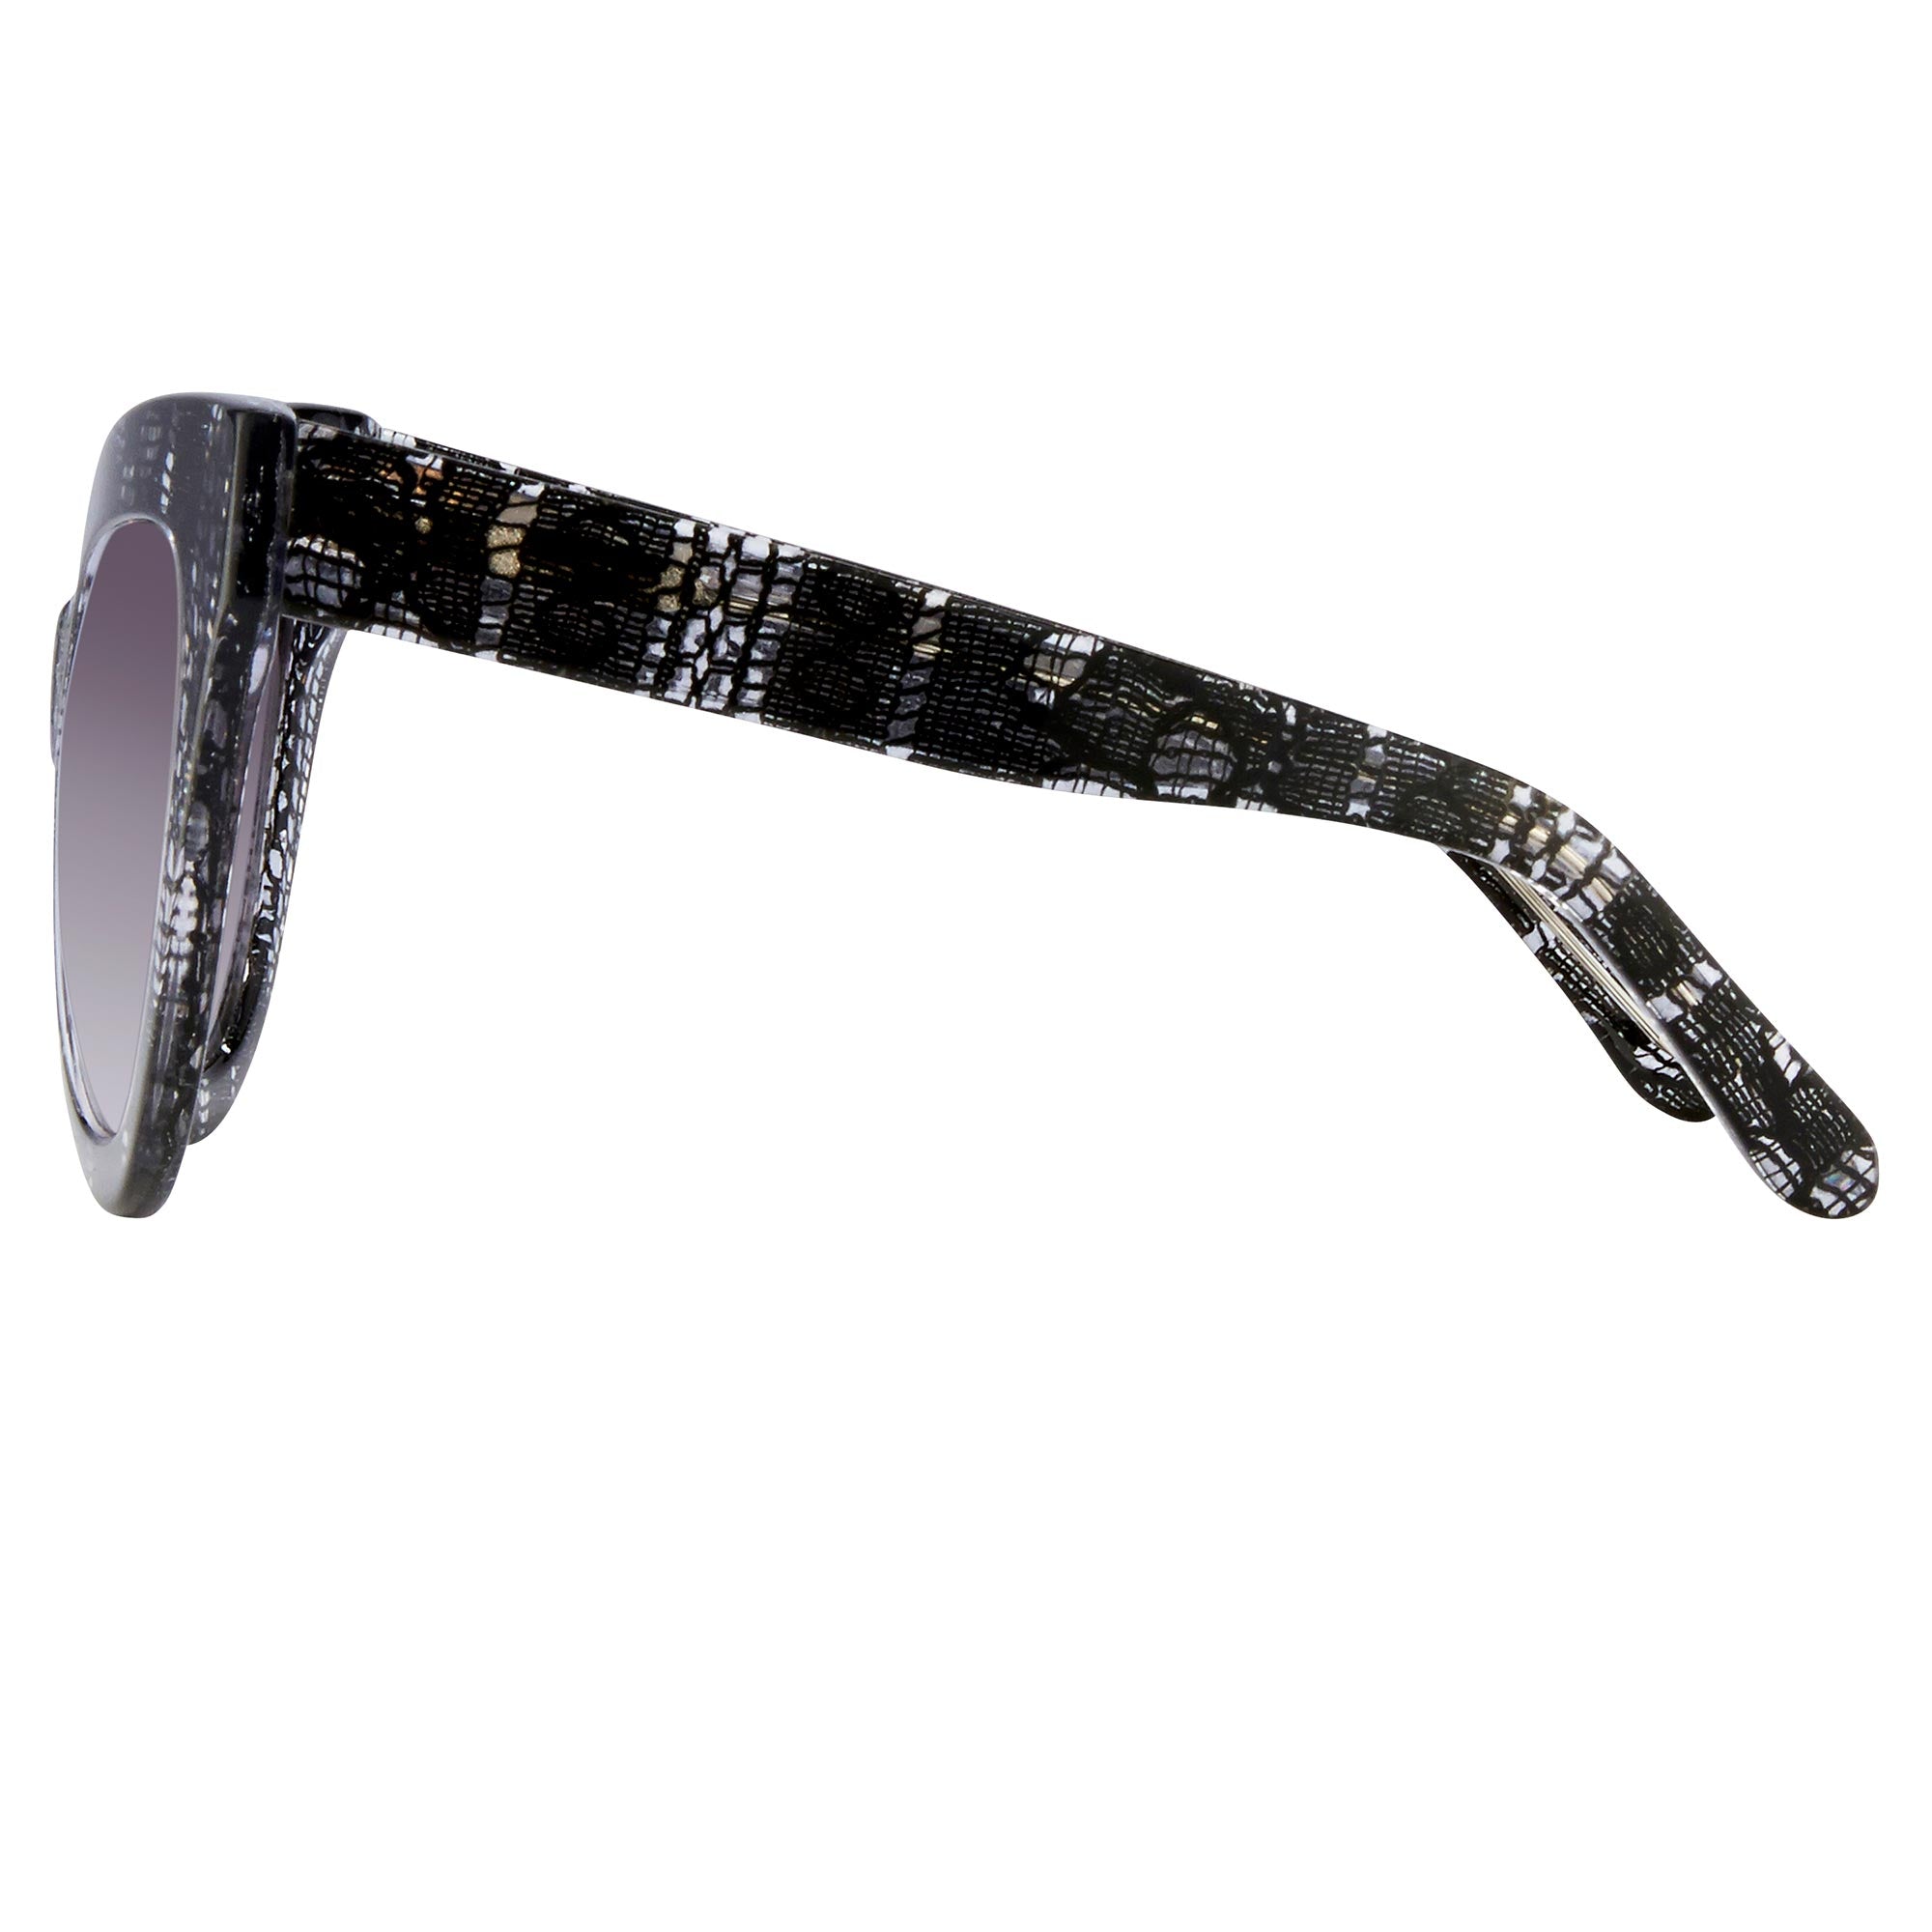 Color_EDM21C1SUN - Erdem 21 C1 Cat Eye Sunglasses